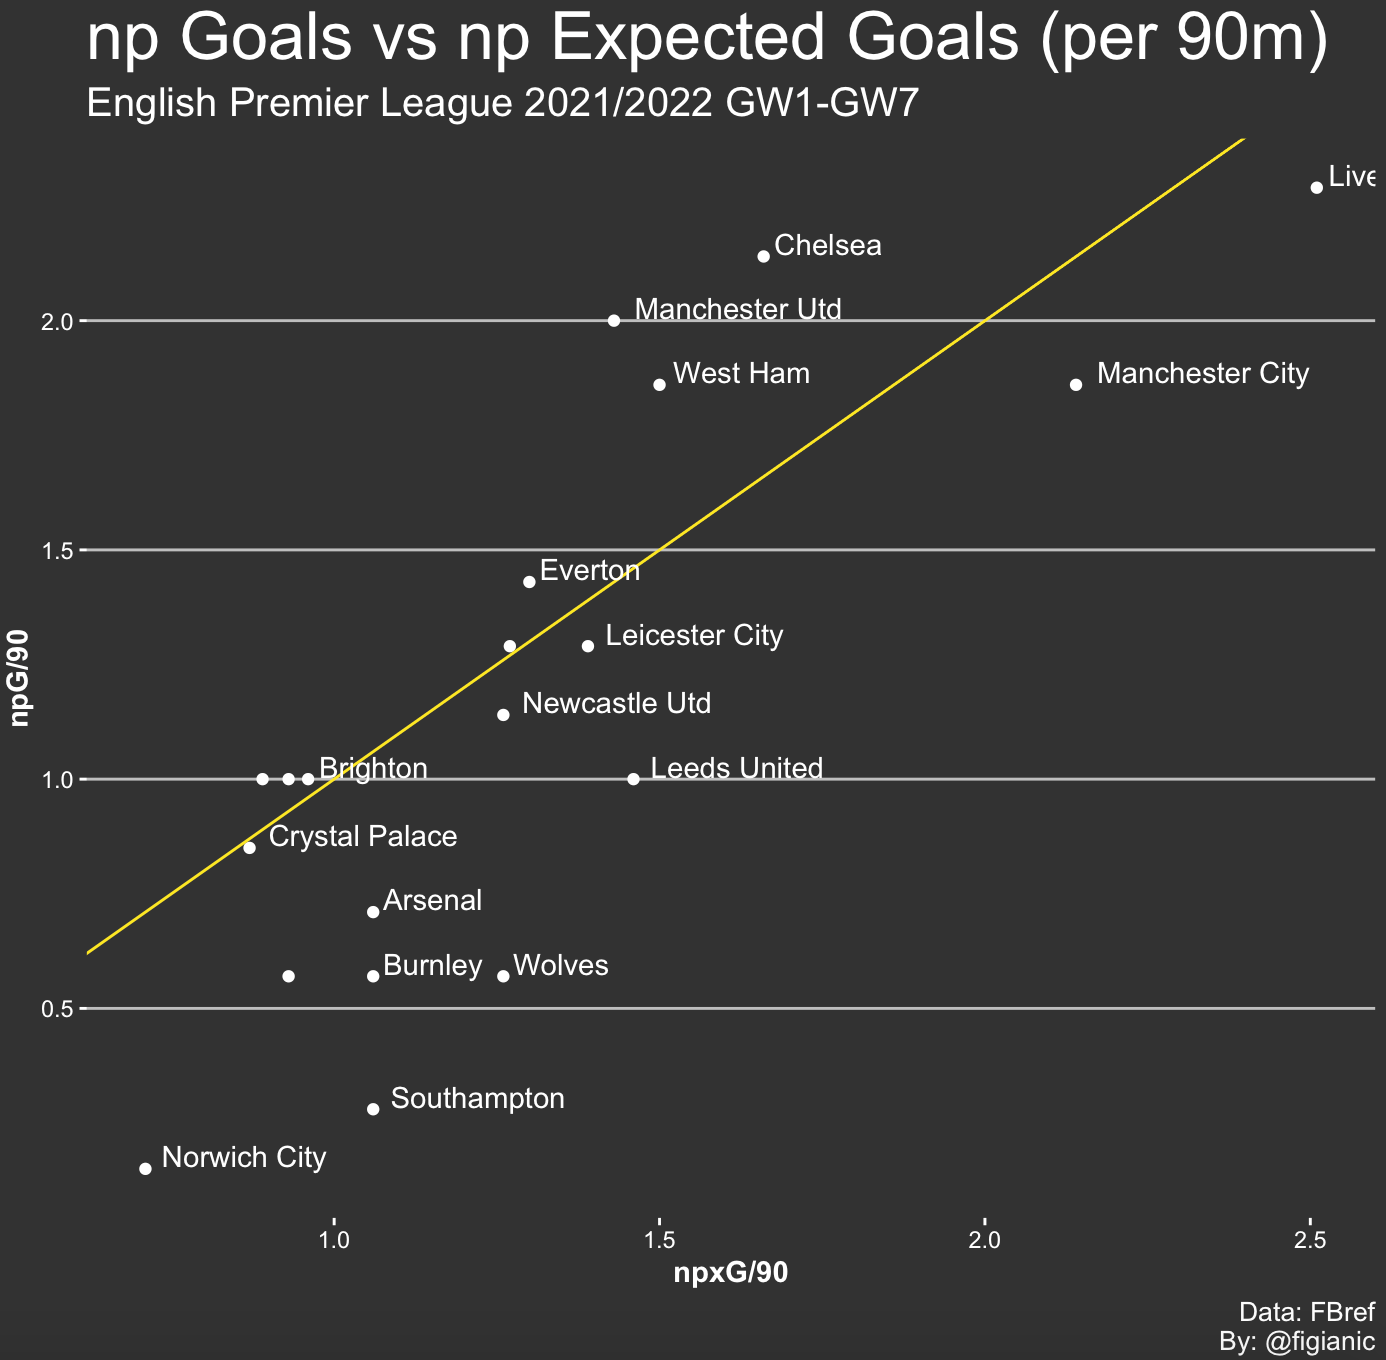 Football Analytics: Using R and FBref Data - Part 2